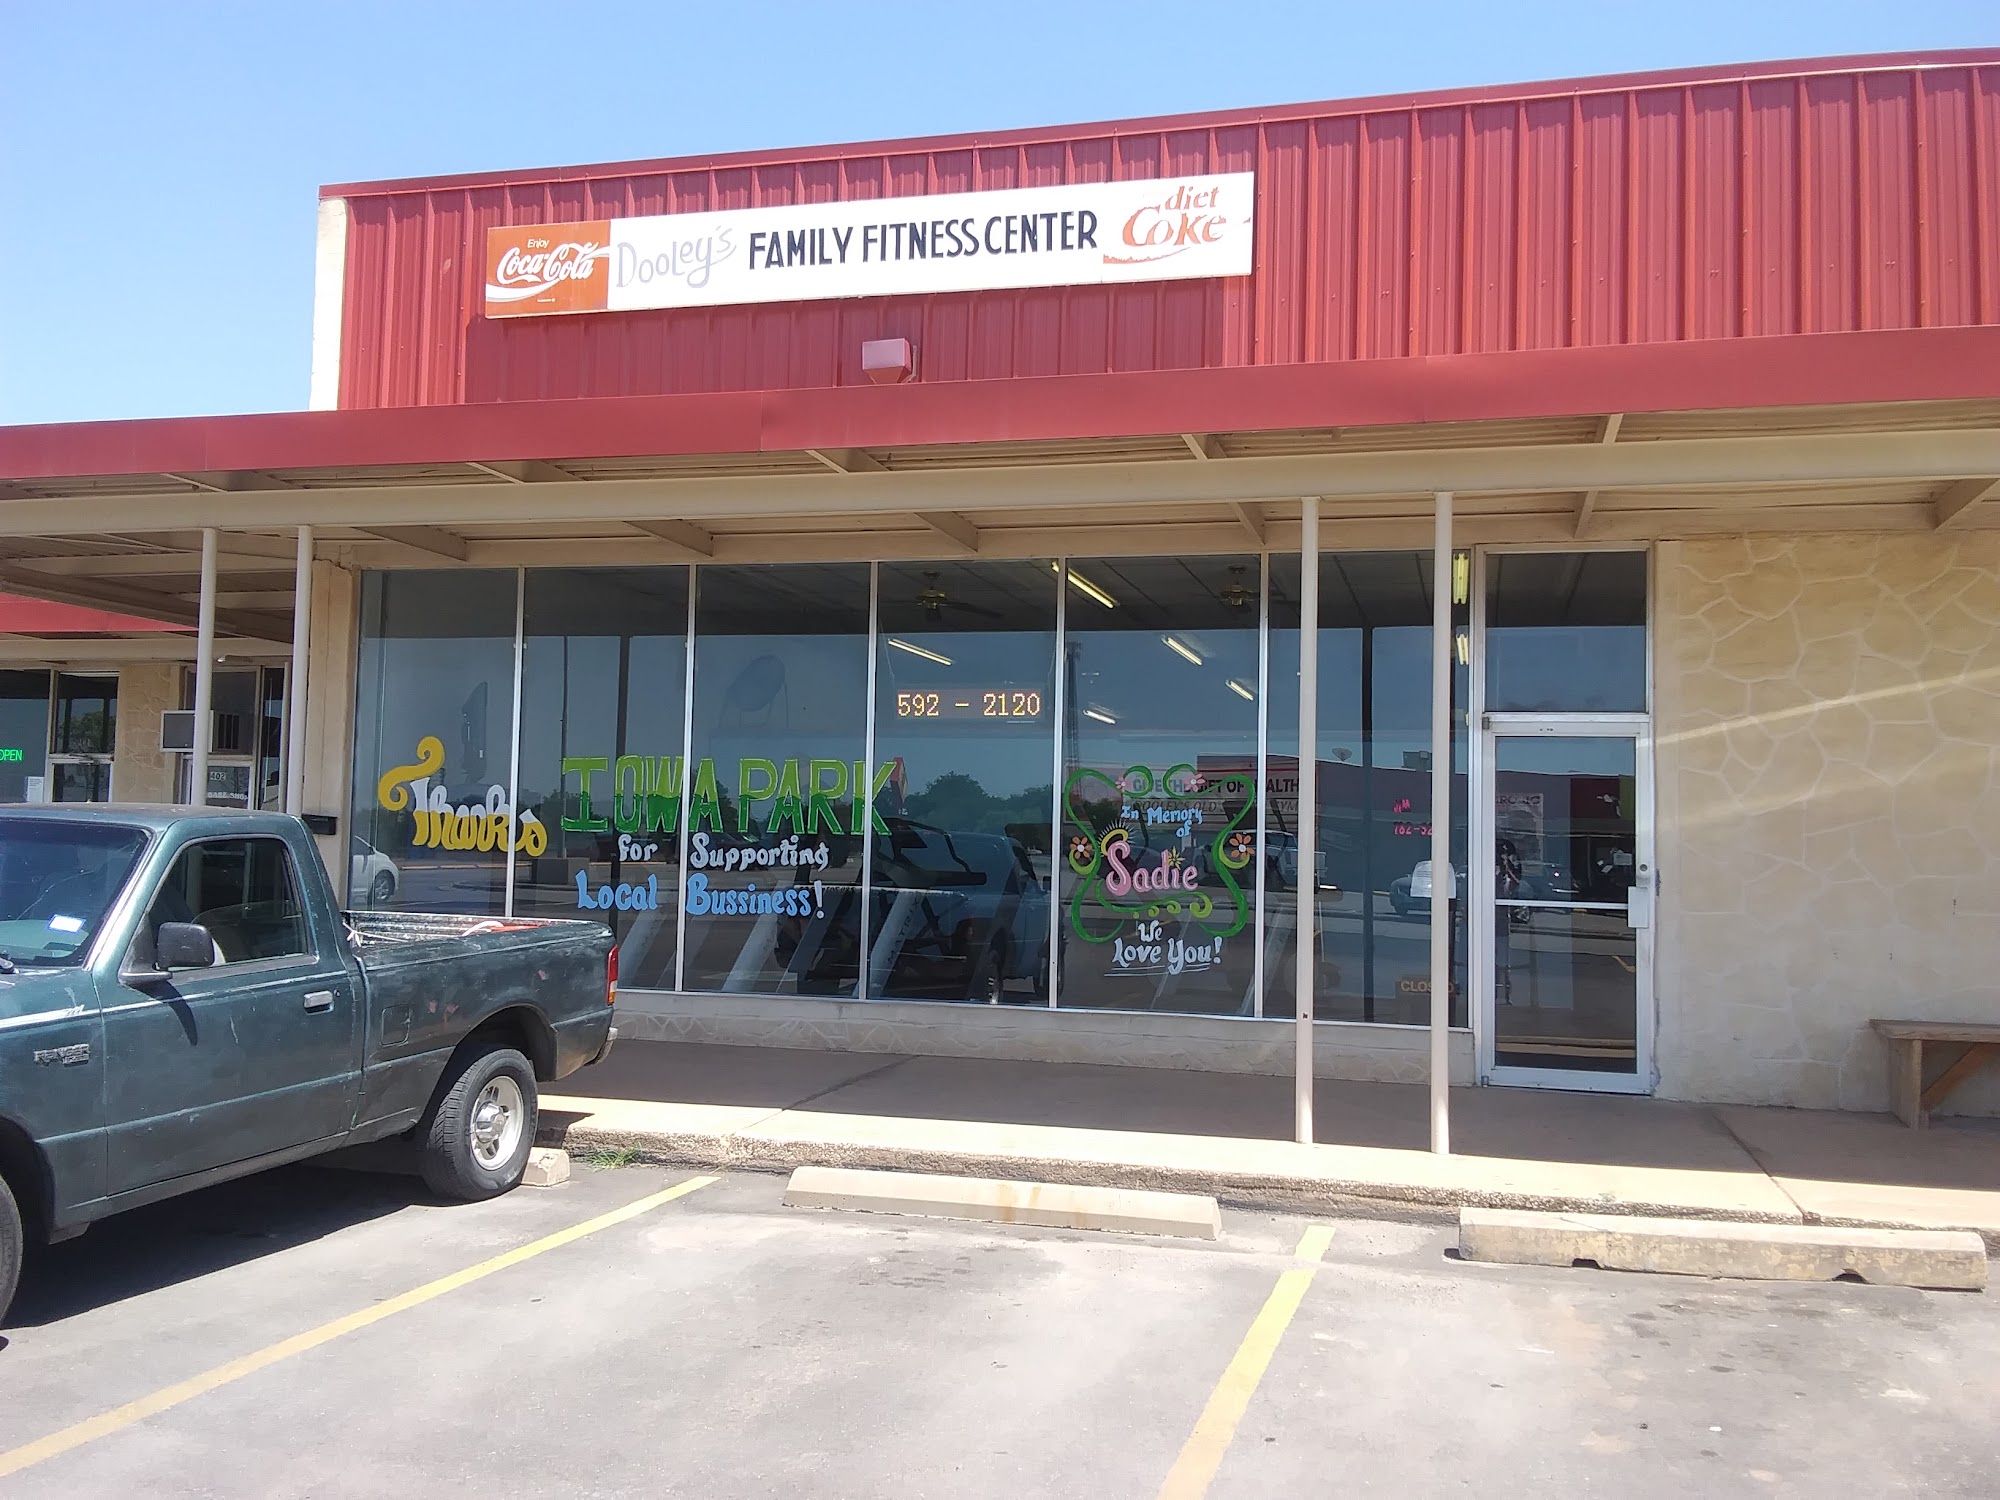 Dooley's Family Fitness Center 400 W Park Ave D, Iowa Park Texas 76367